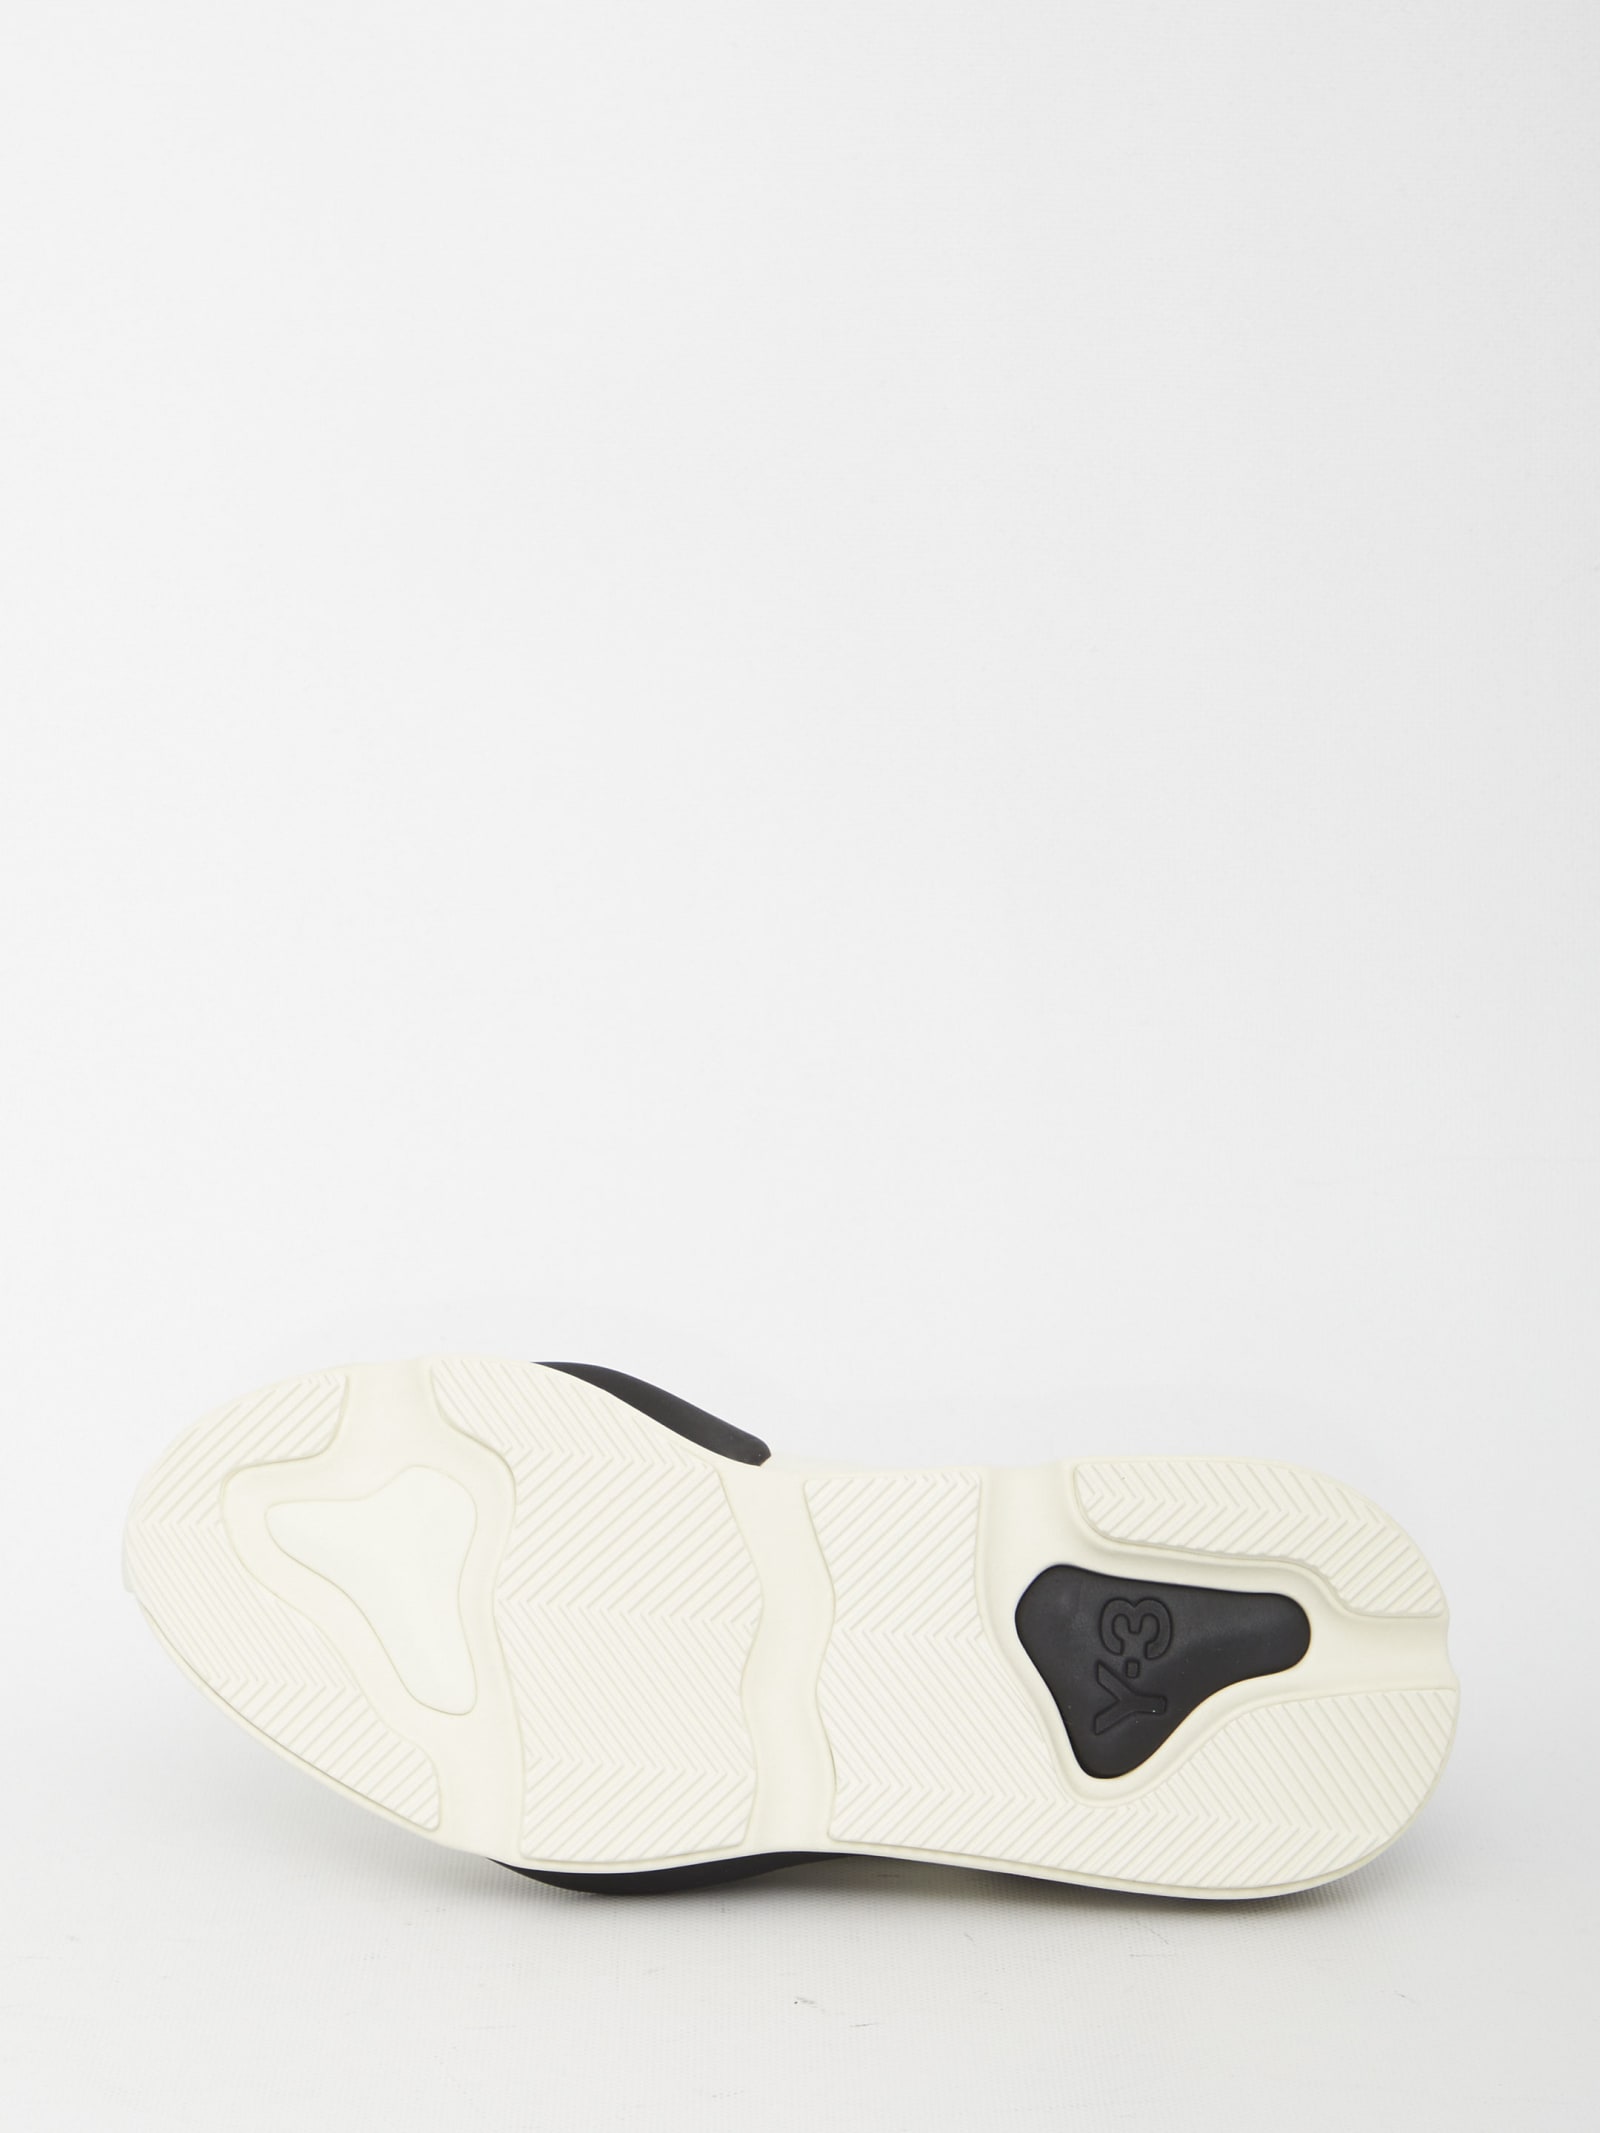 Shop Y-3 Kaiwa Sneakers In White Black